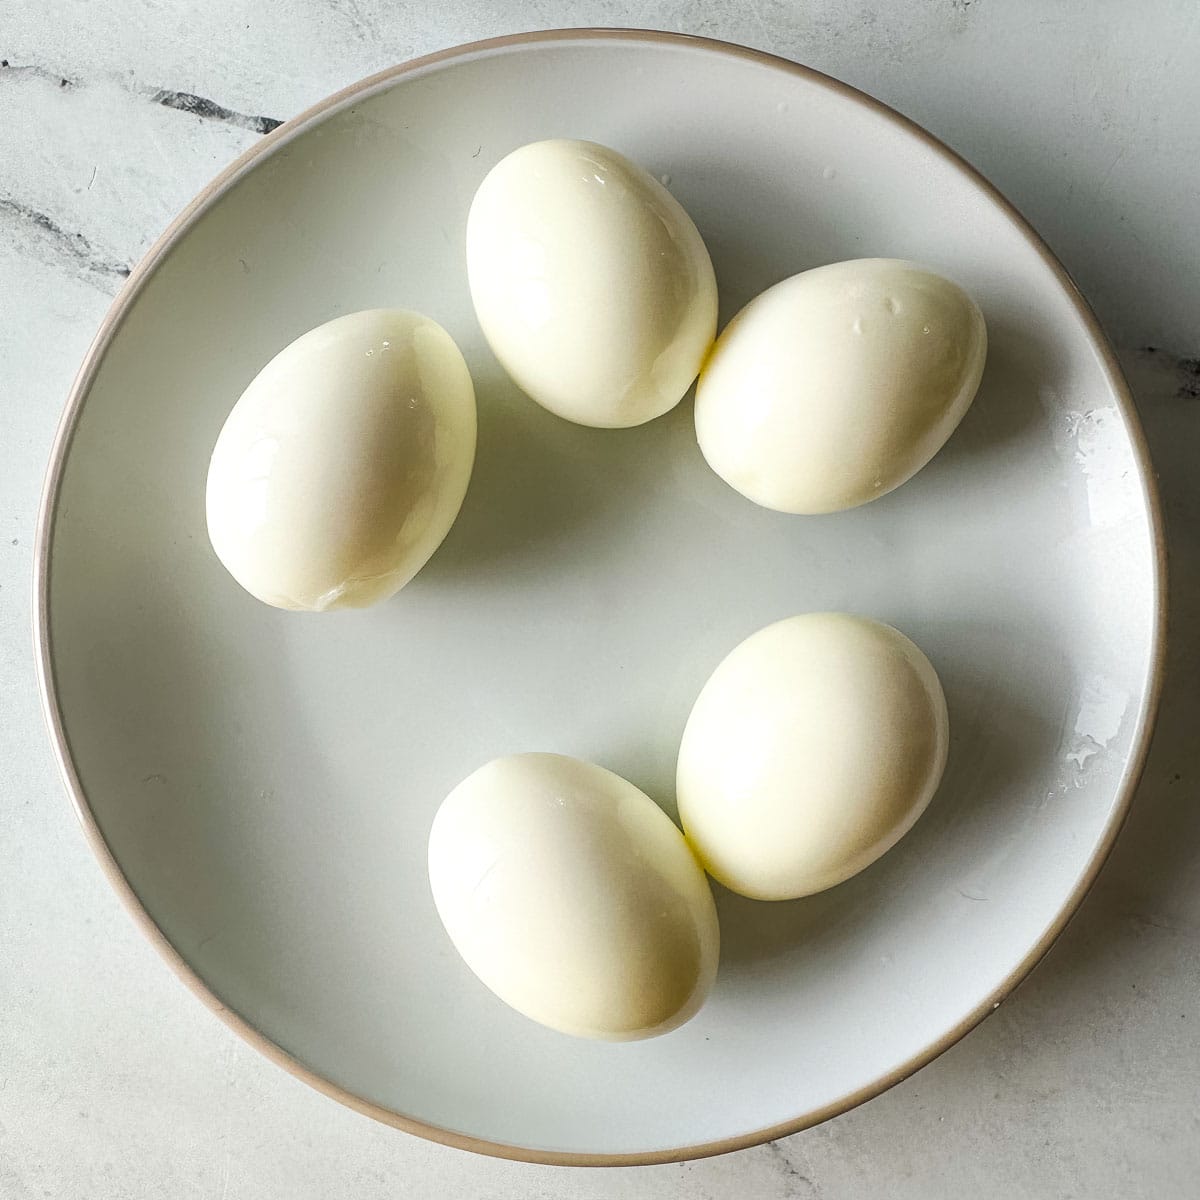 peeled hard-boiled eggs on a plate.